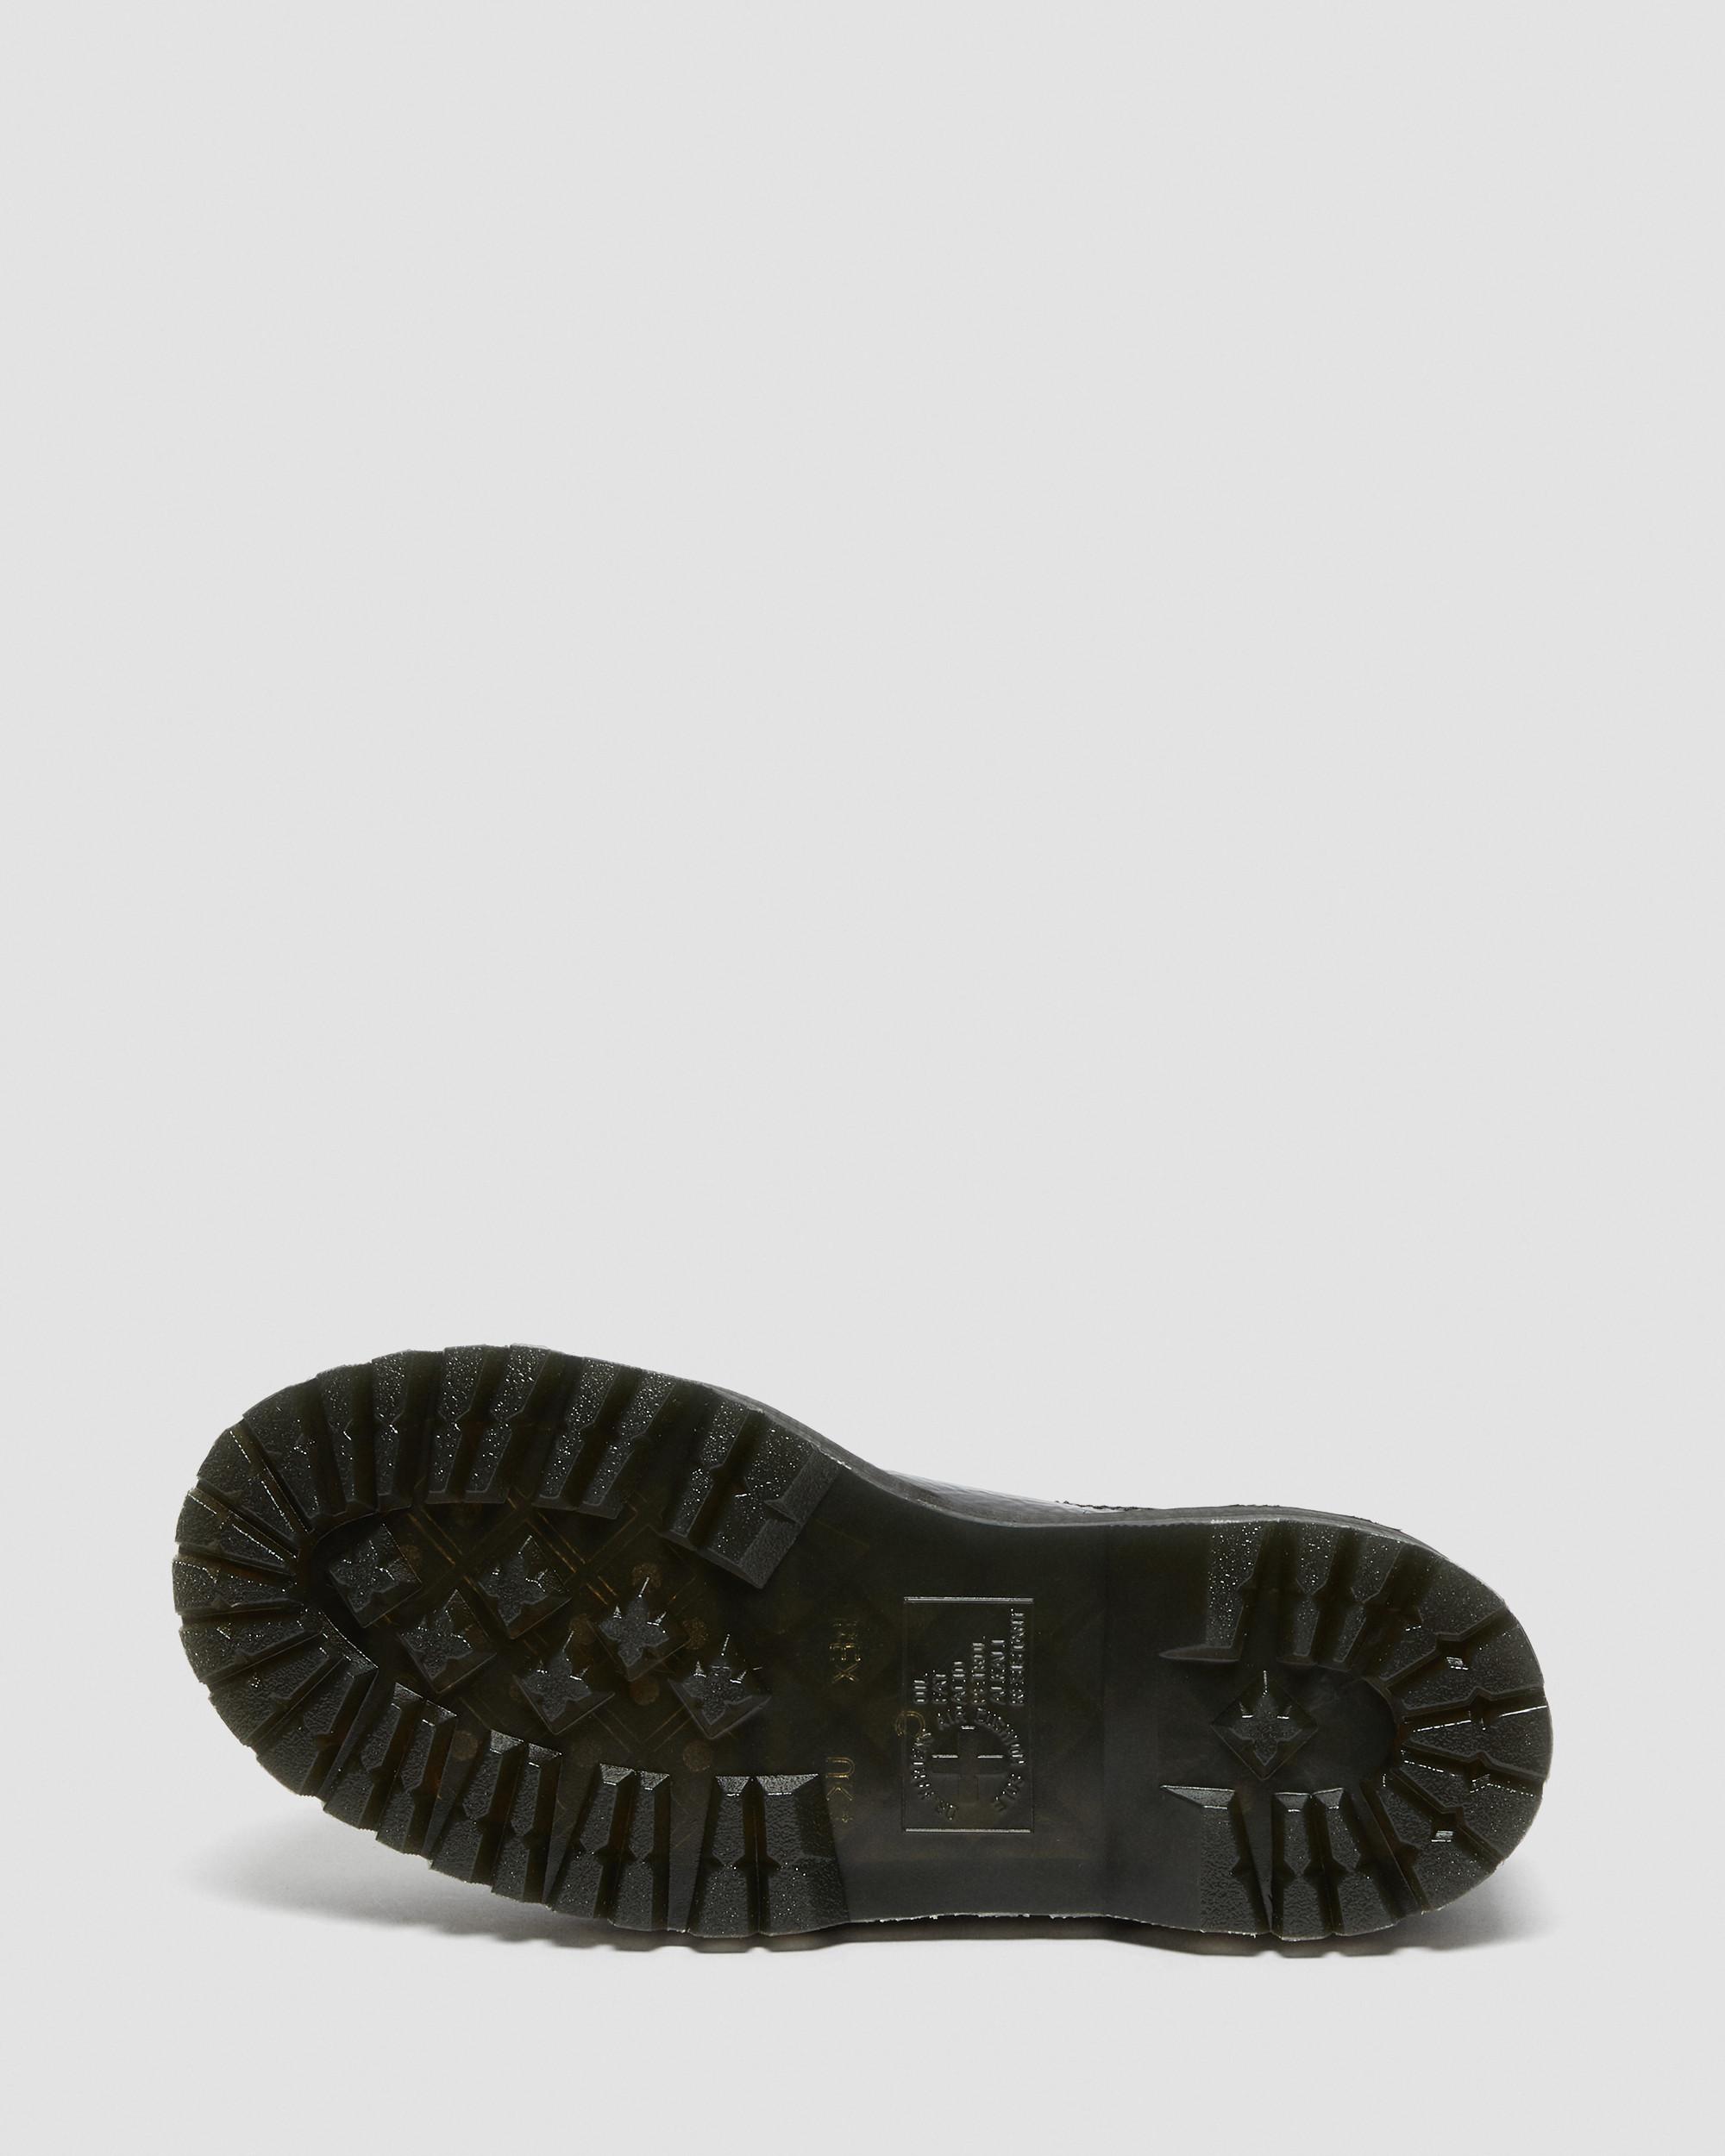 2976 Max Distressed Patent Platform Boots in Black | Dr. Martens